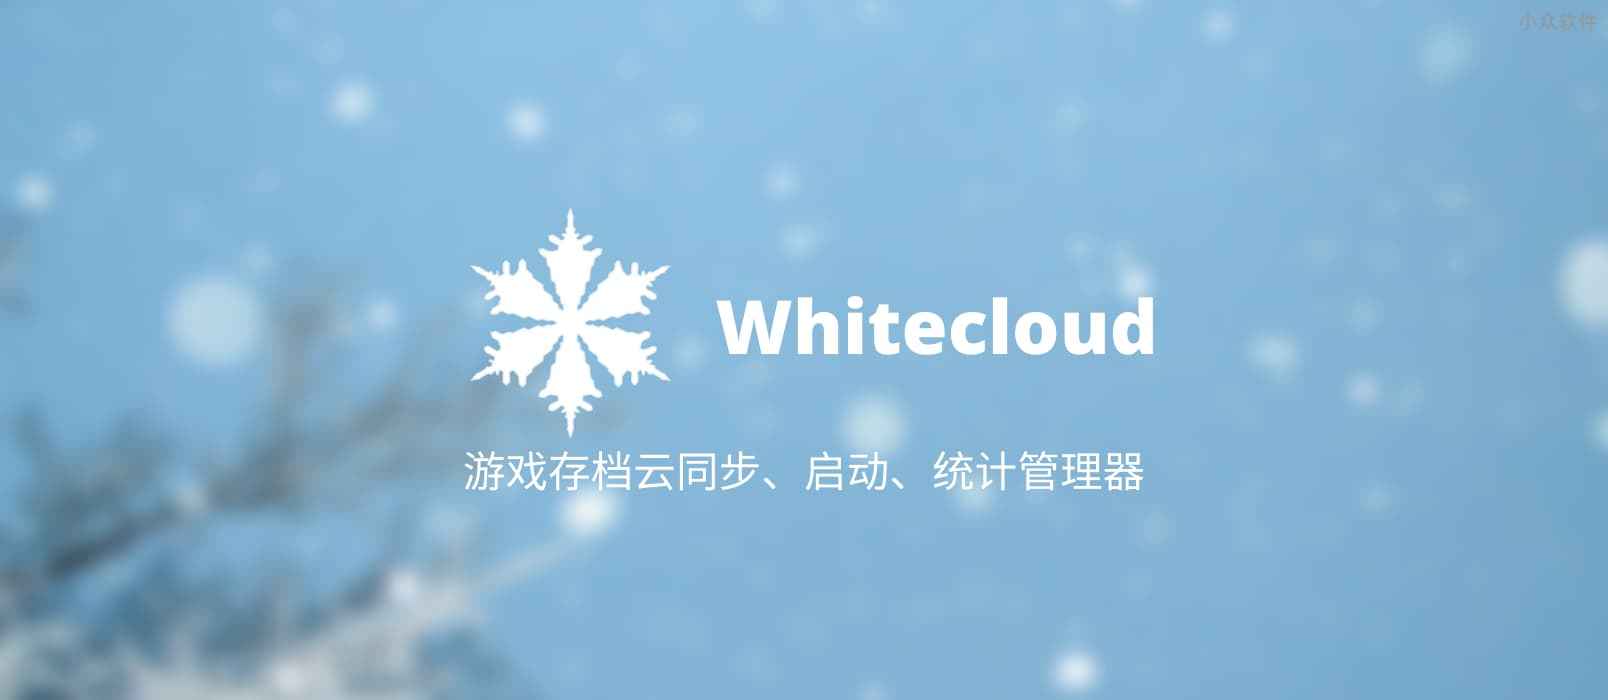 Whitecloud - 本地游戏存档管理器：存档云同步、启动、攻略、时间统计[Windows] 1